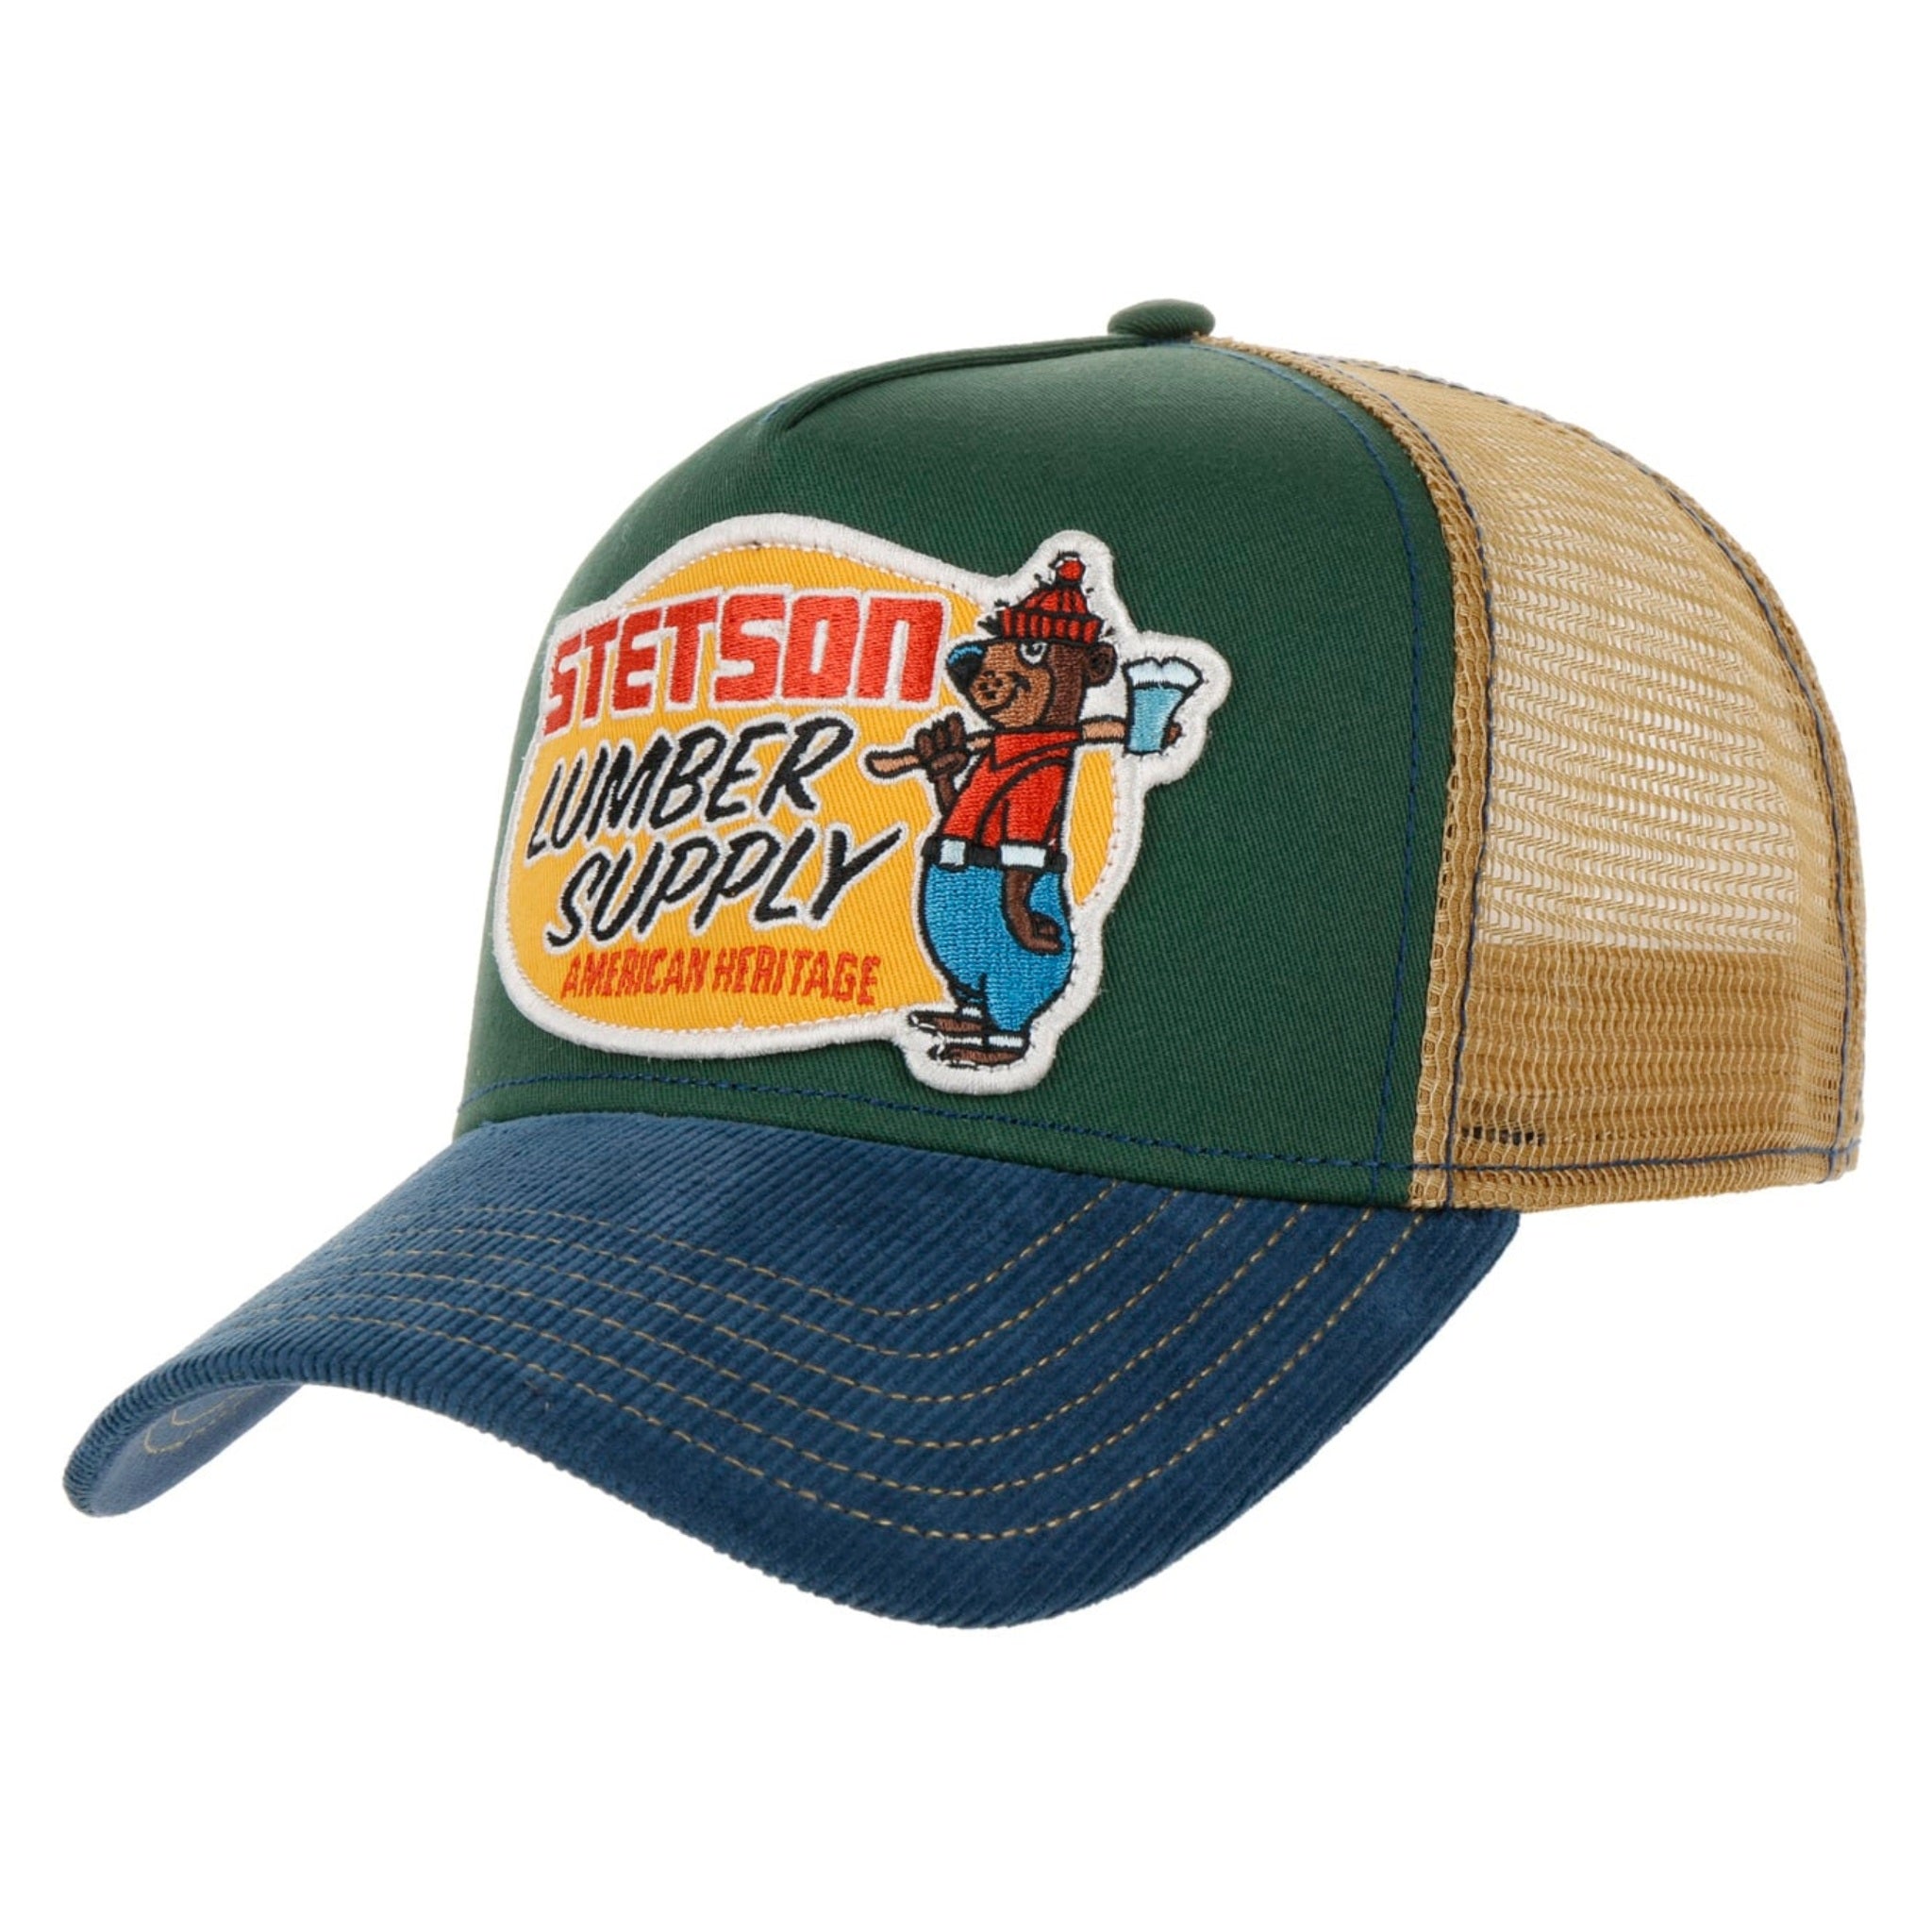 The Hat Shop Stetson Lumber Supply Trucker Cap